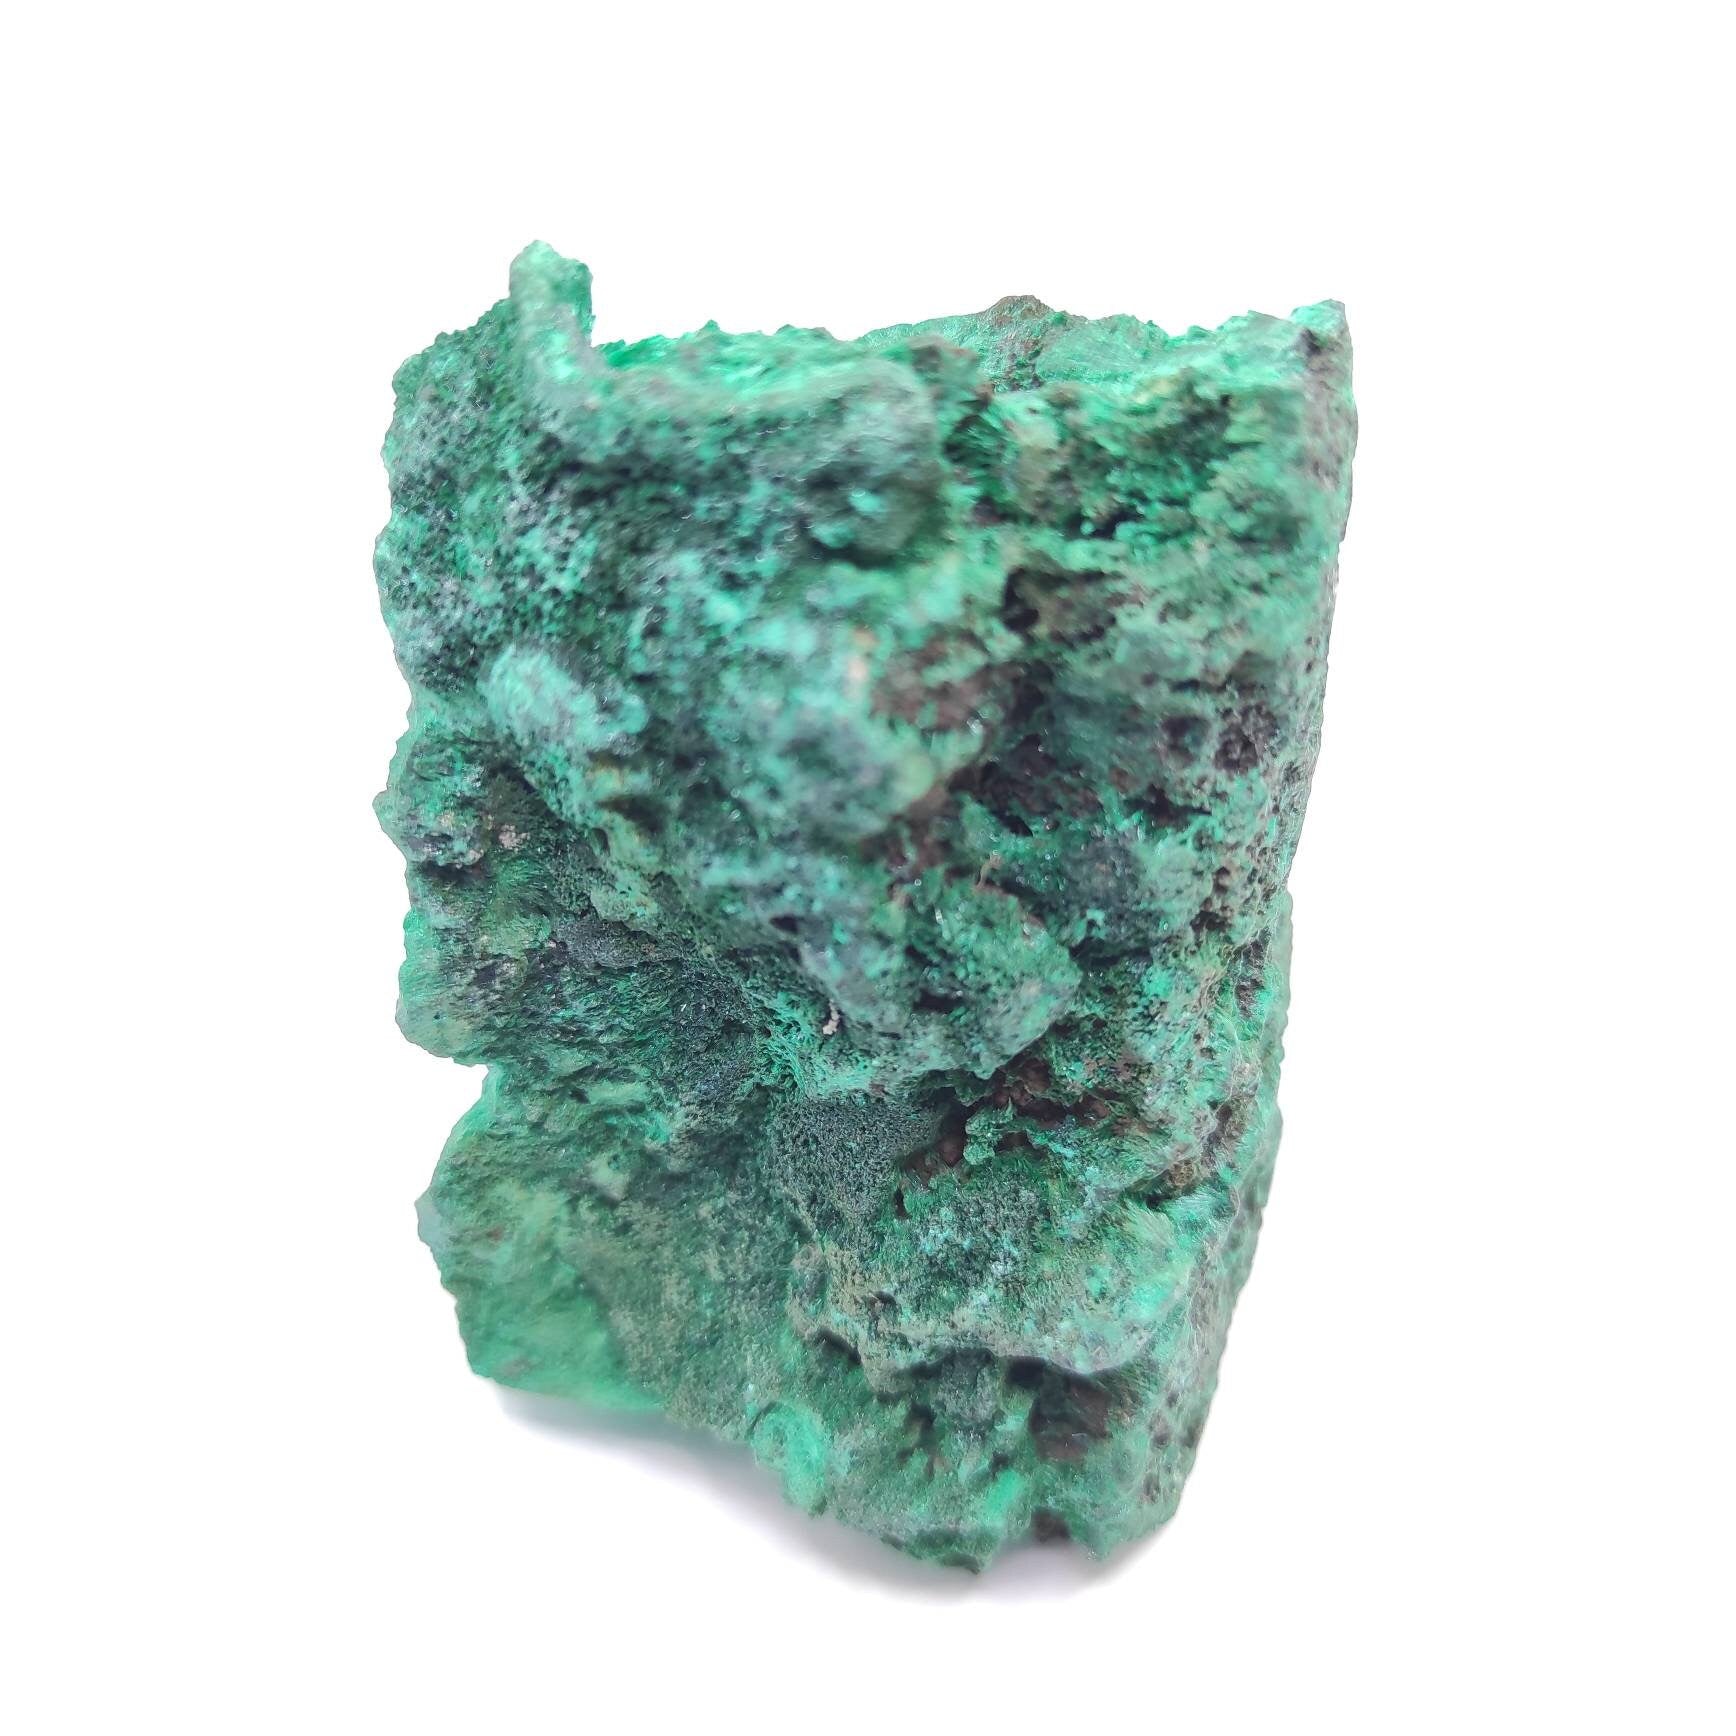 112g Fibrous Malachite Hubei Malachite Natural Malachite Sparkling Malachite Raw Mineral Specimen Natural Crystals Green Malachite Crystal